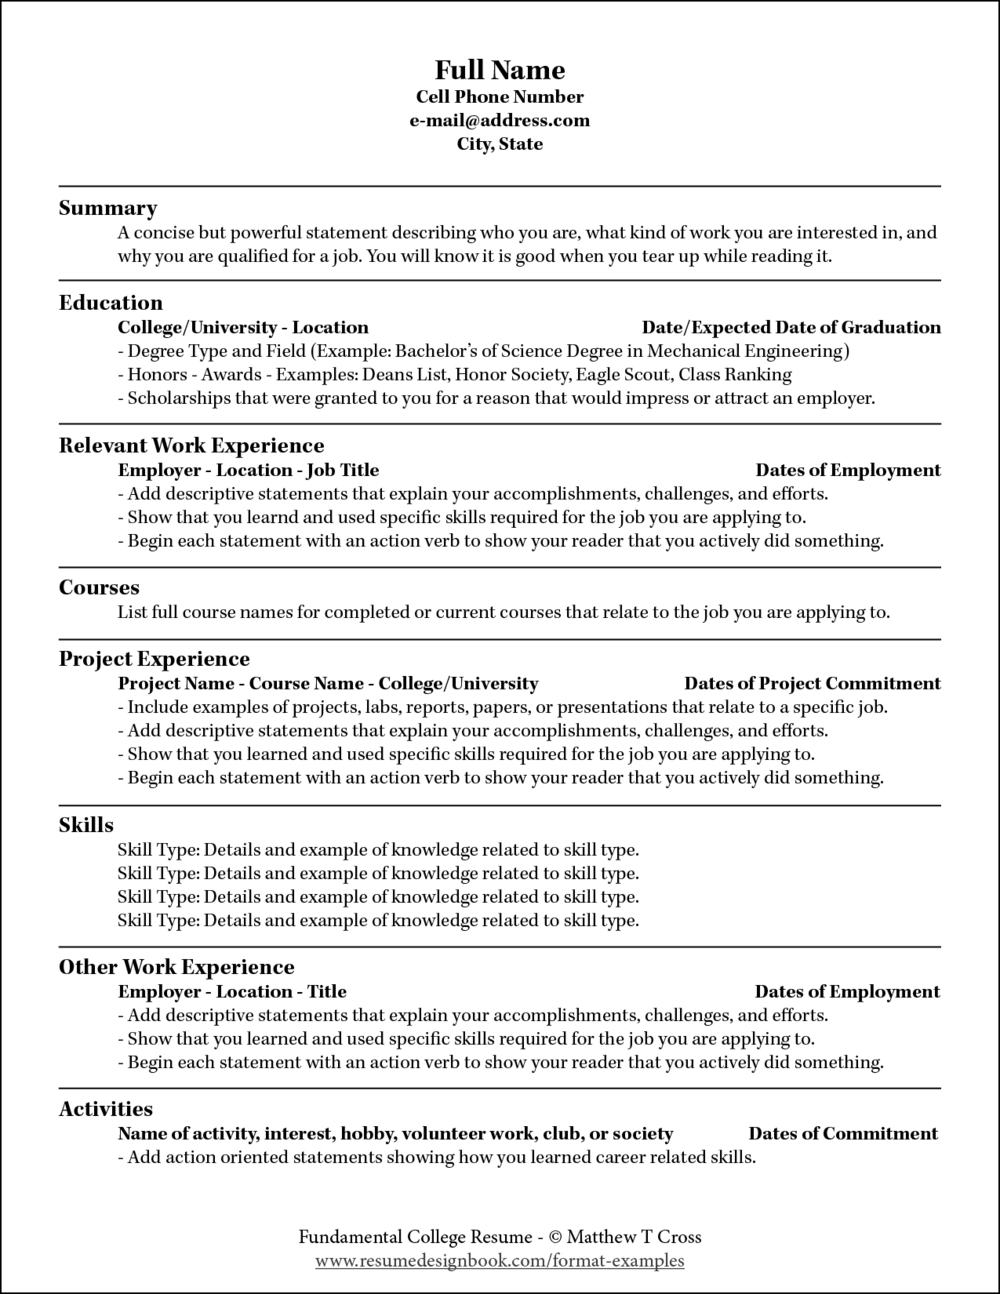 format examples  u2014 the resume design book